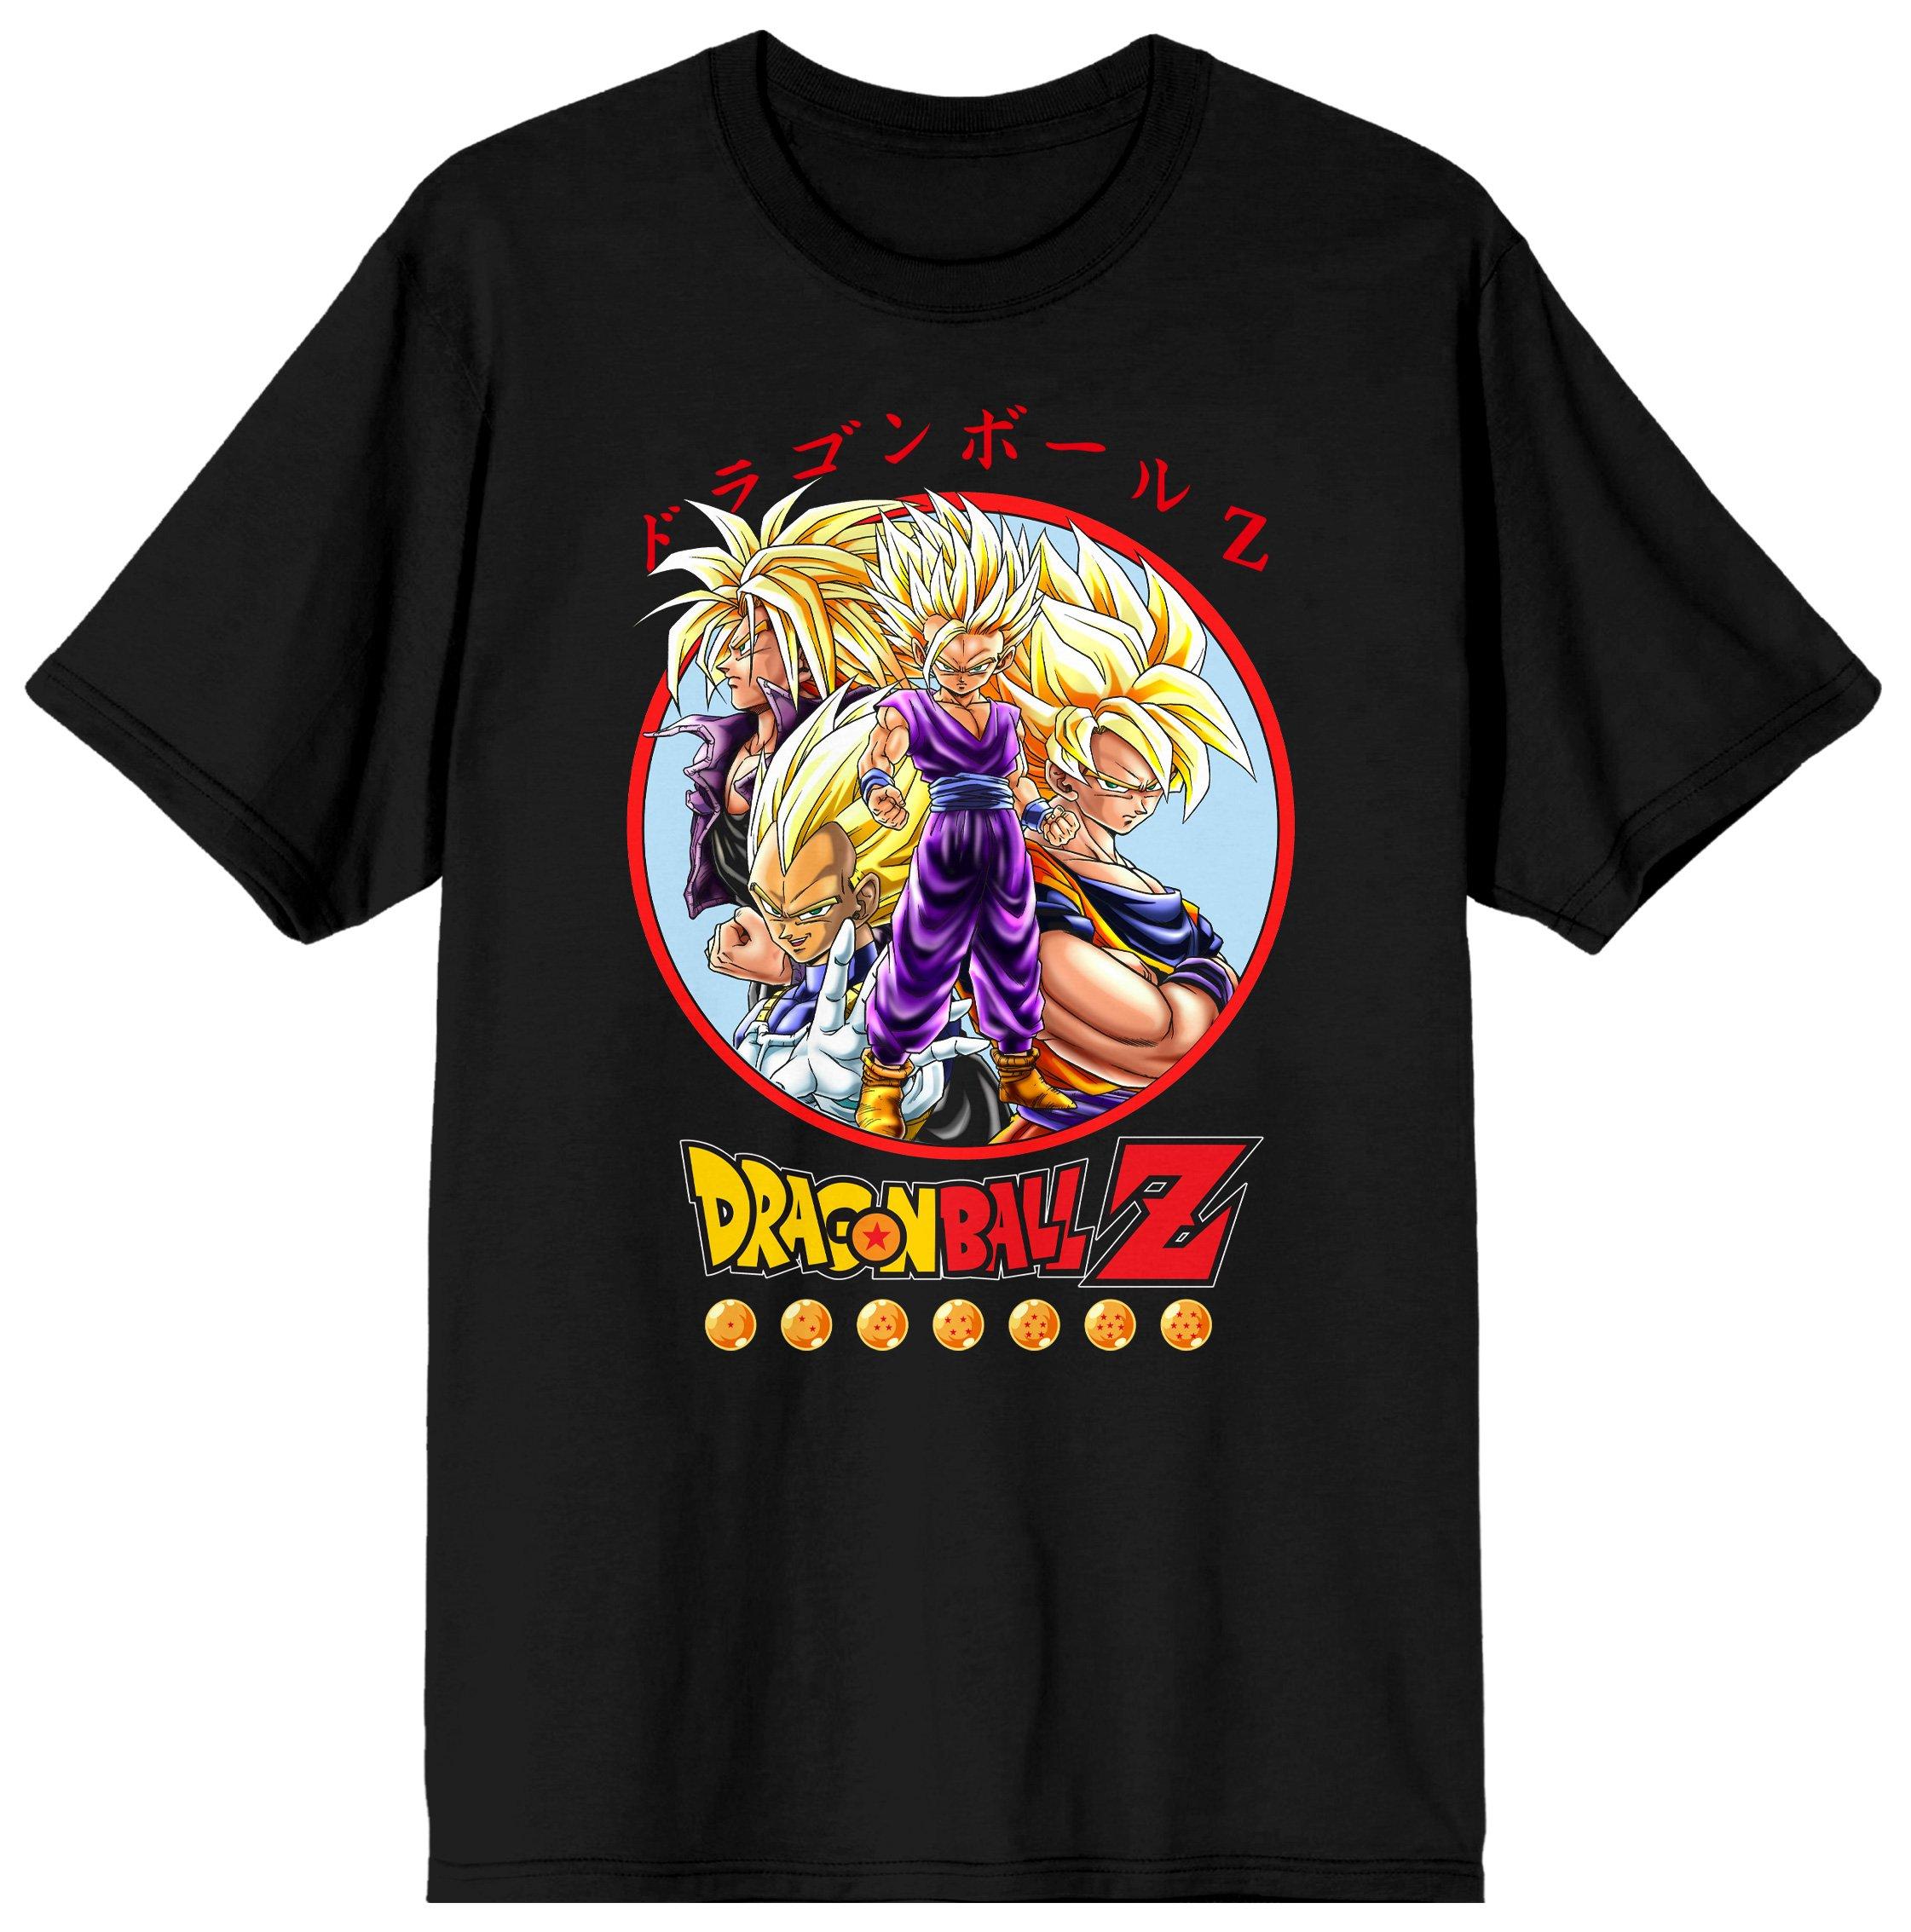 Dragon Ball Z Anime Characters Group Shot Men's Black Short Sleeve Graphic T-Shirt, Size: Medium, Bioworld Merchandising